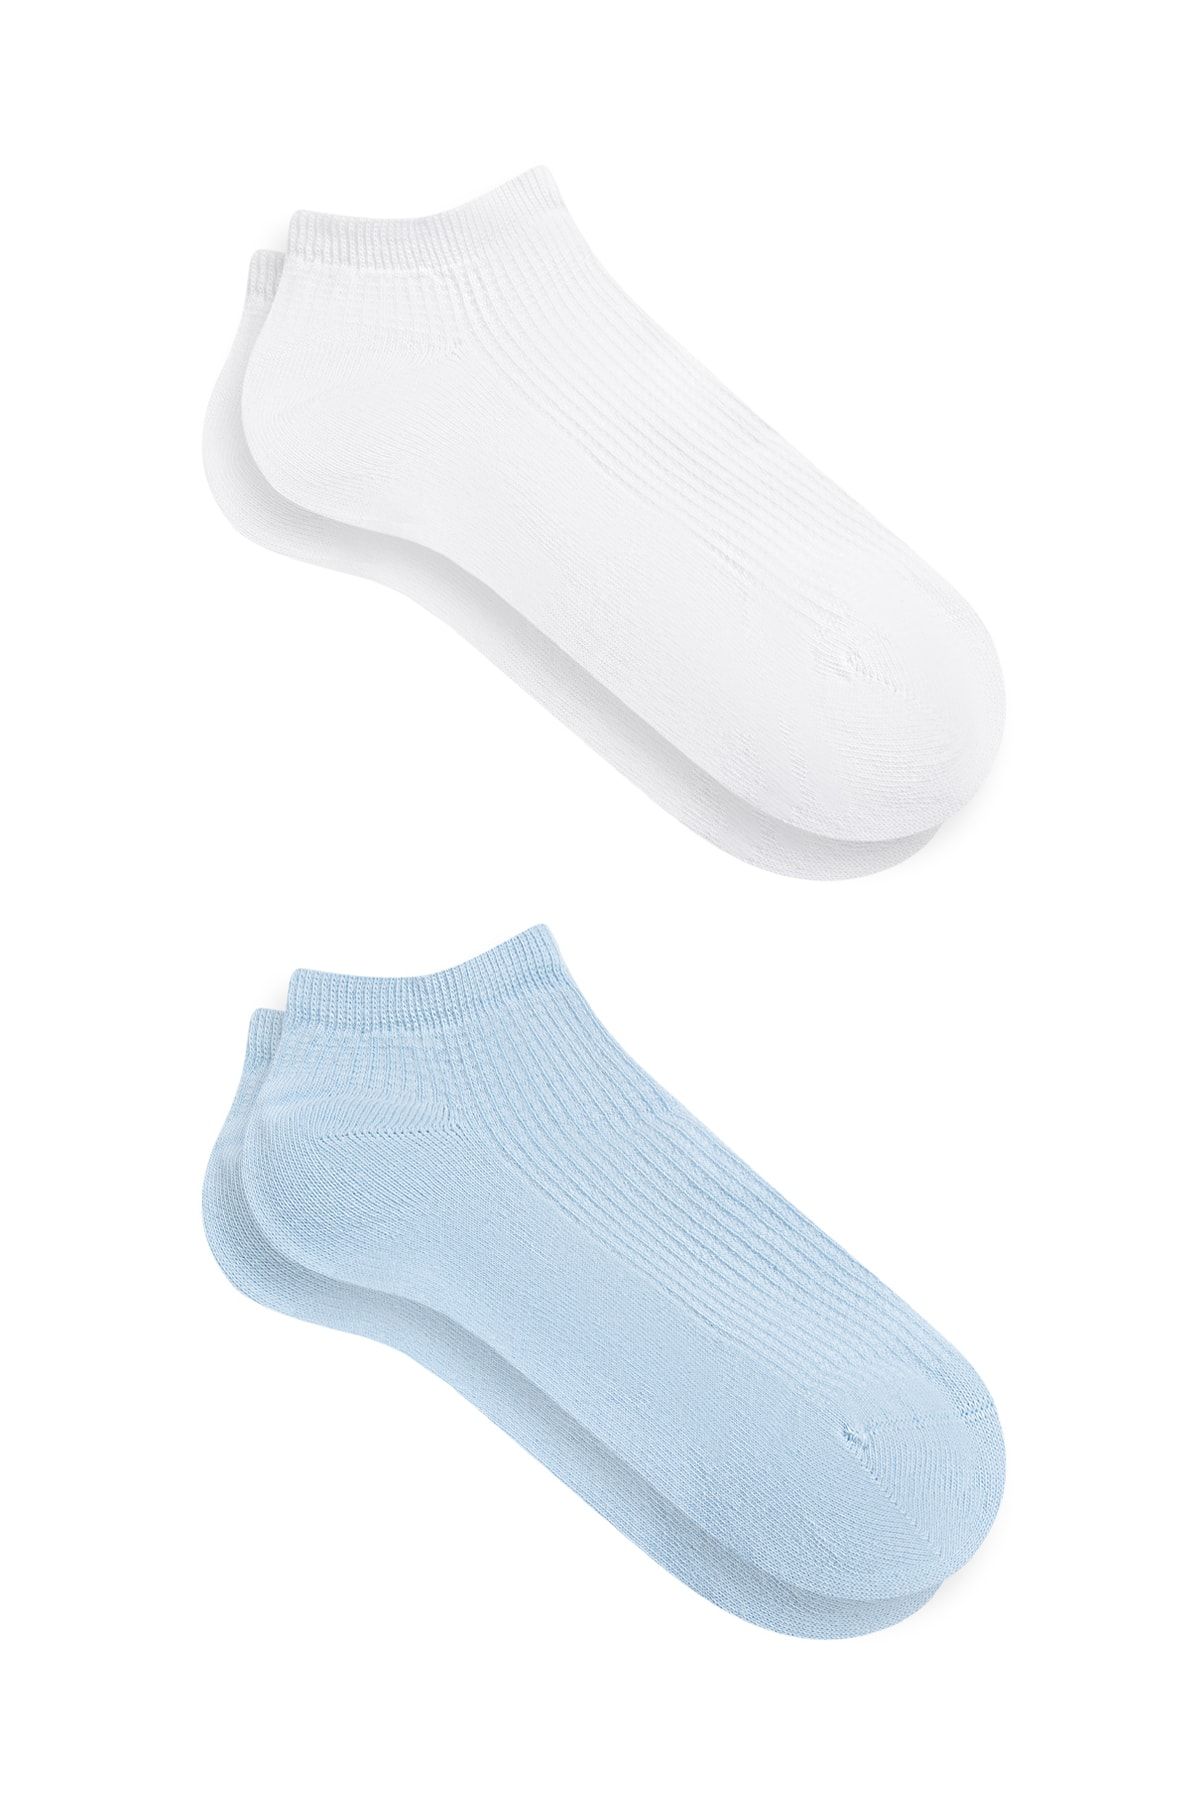 Mavi 2li Patik Çorabı Seti 1911393-81960